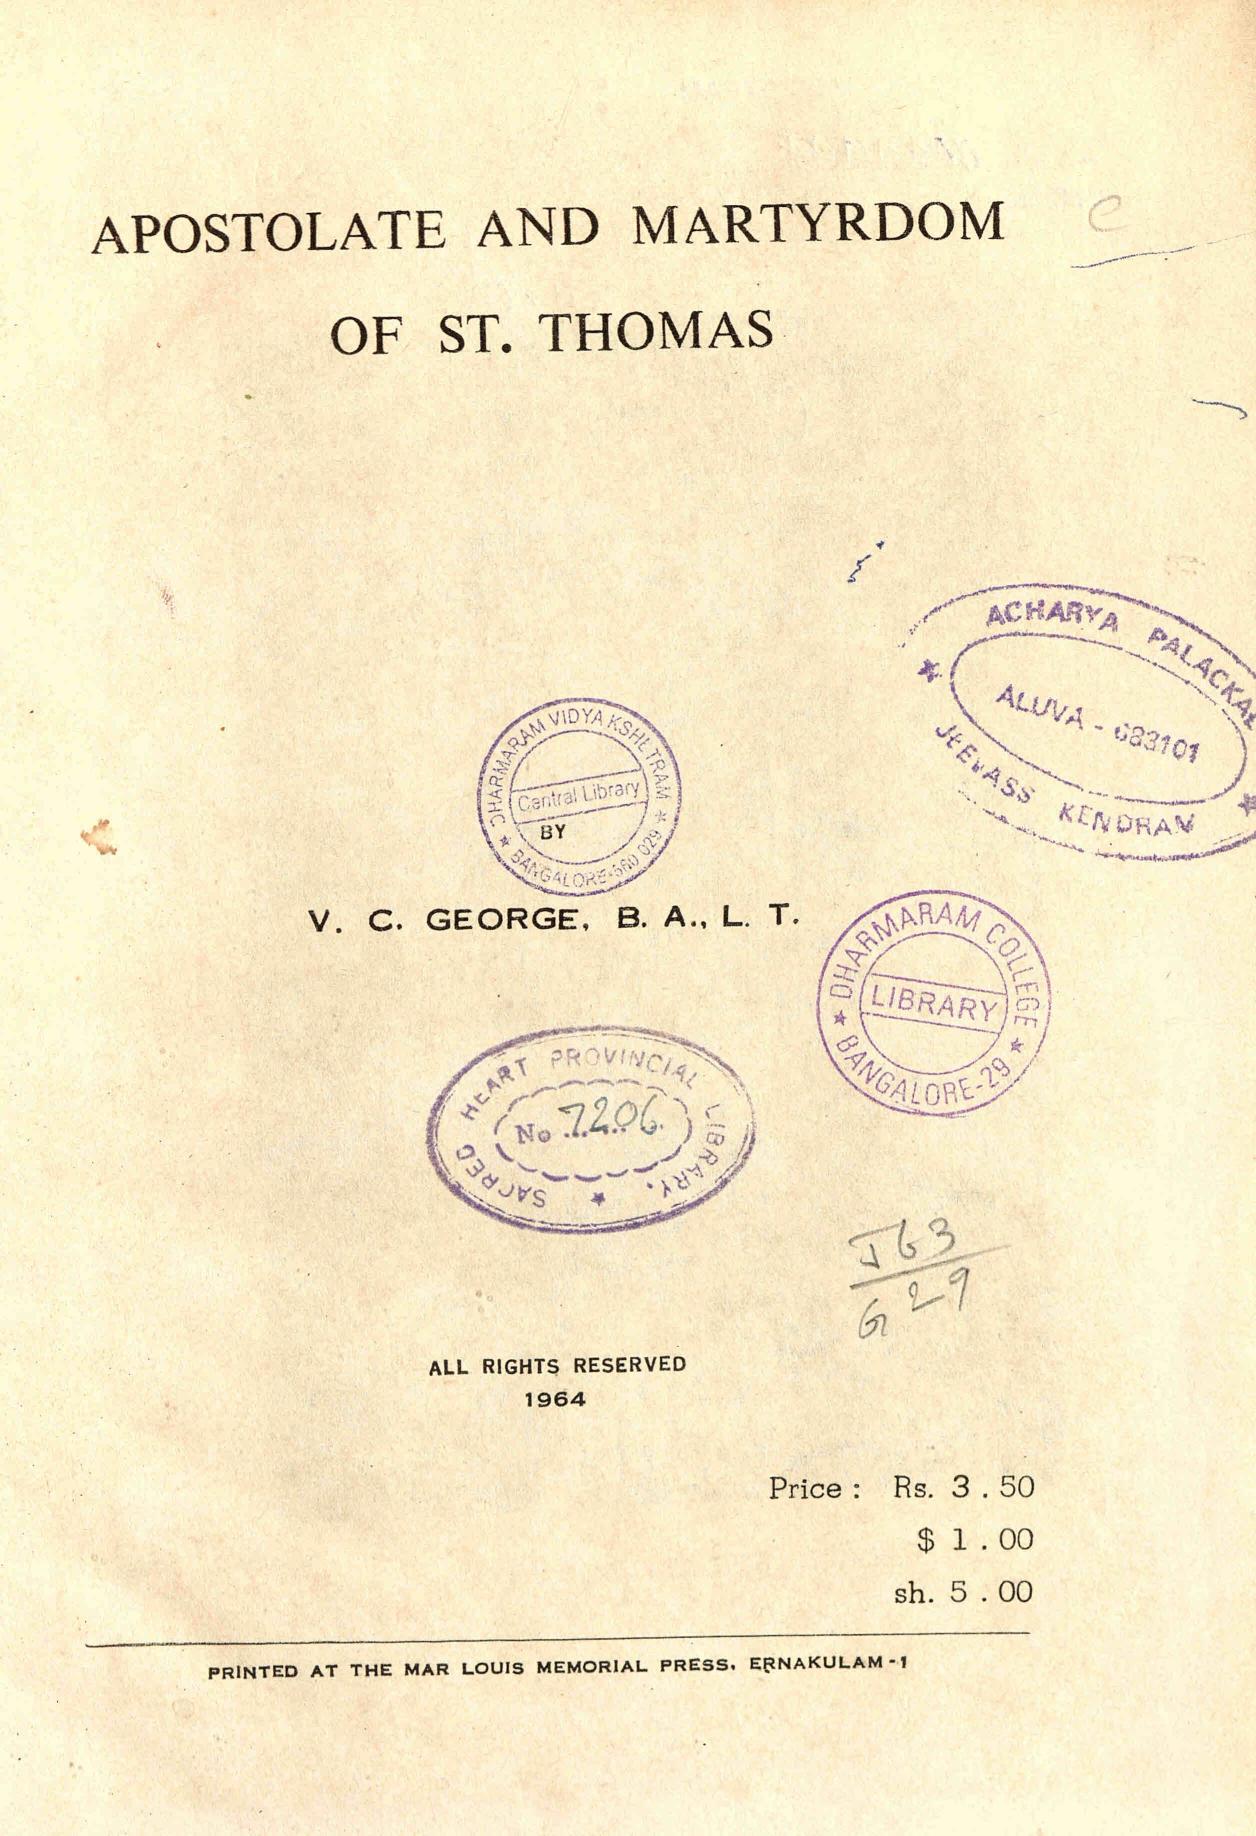 1964 - Apostolate and Martyrdom of St. Thomas - V. C. George